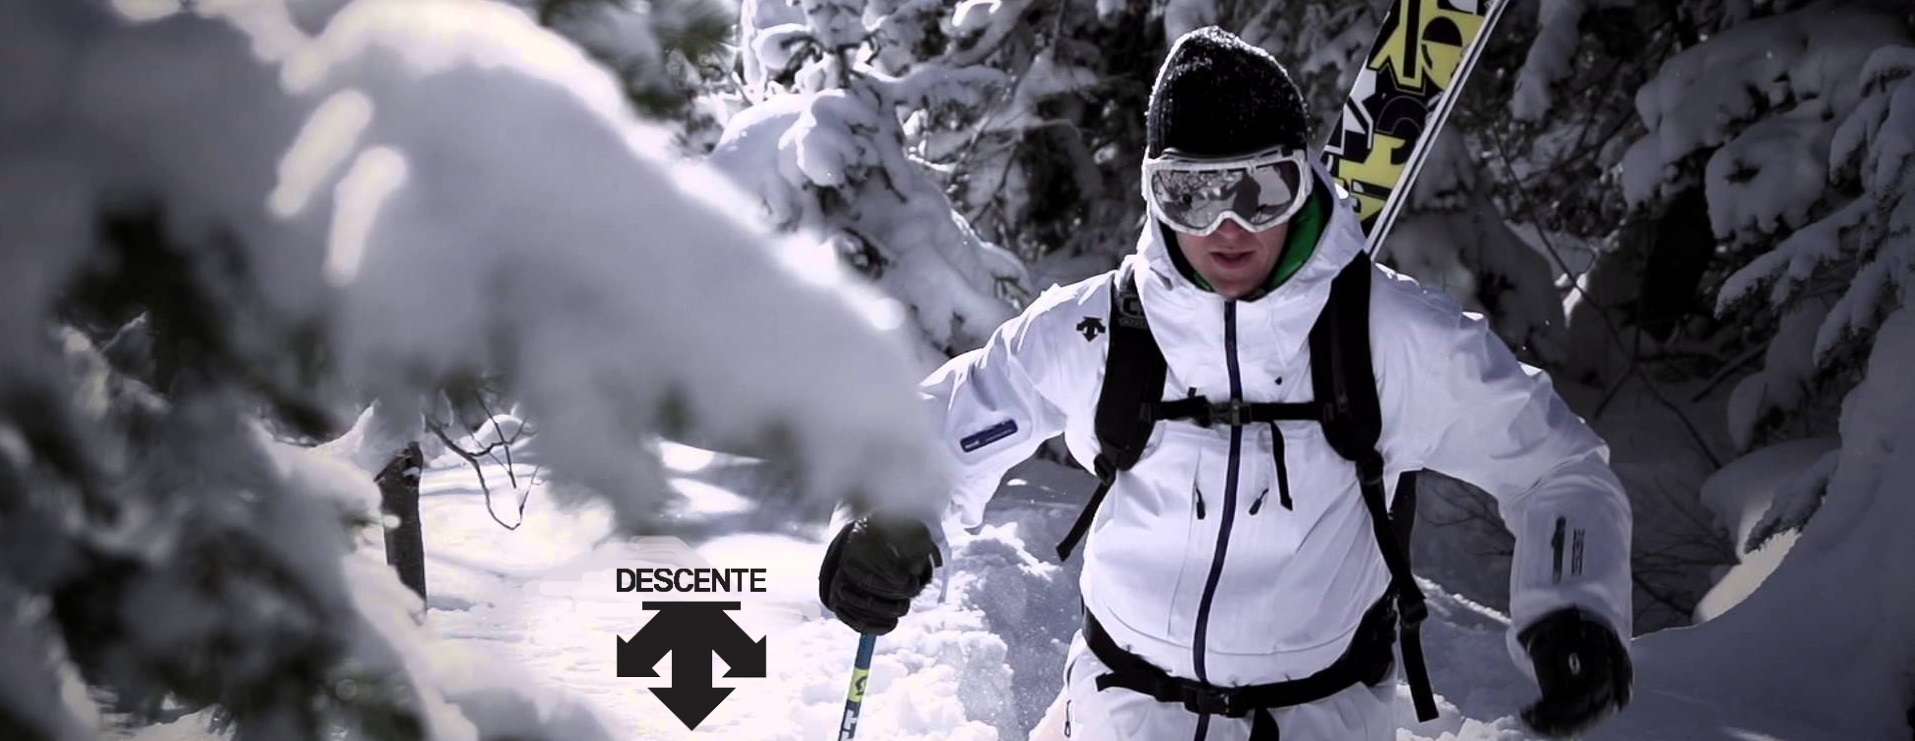 descente man skiing white ski jacket banner logo 1200x464 1